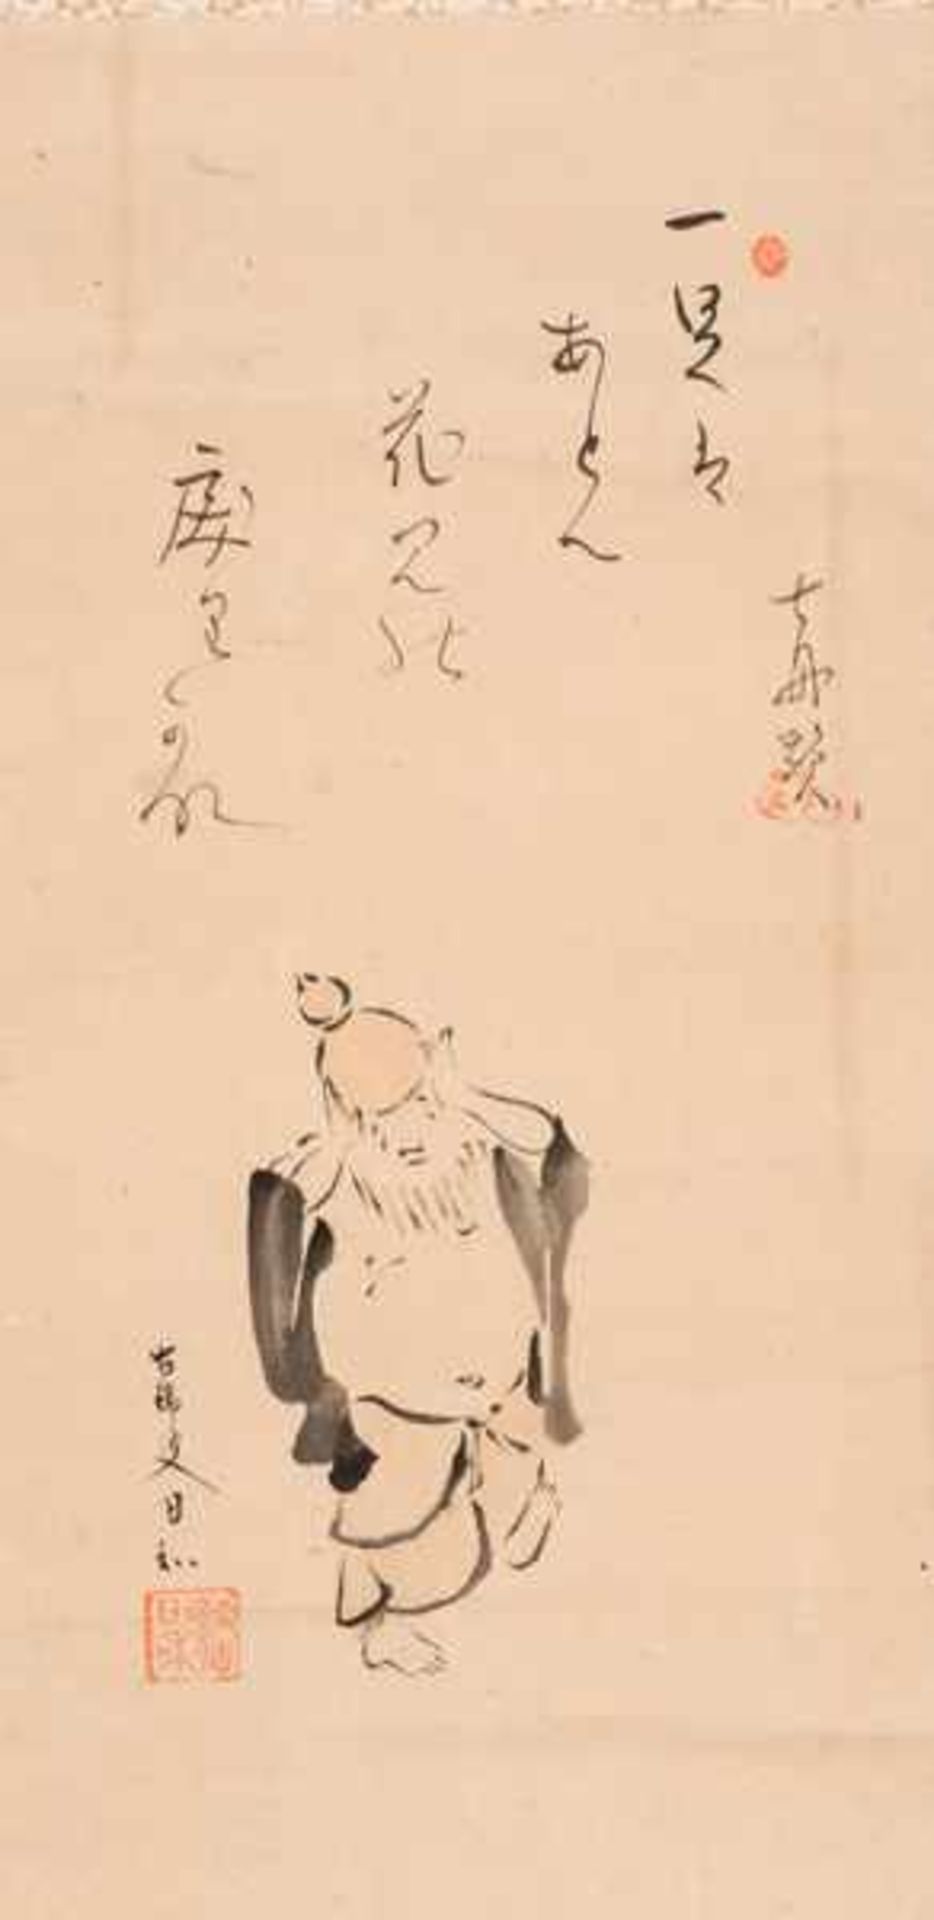 A TATEMONO OF A MAN DRUNK ON SAKE Tatemono painting with ink on paper. Japan, 19th centuryThis